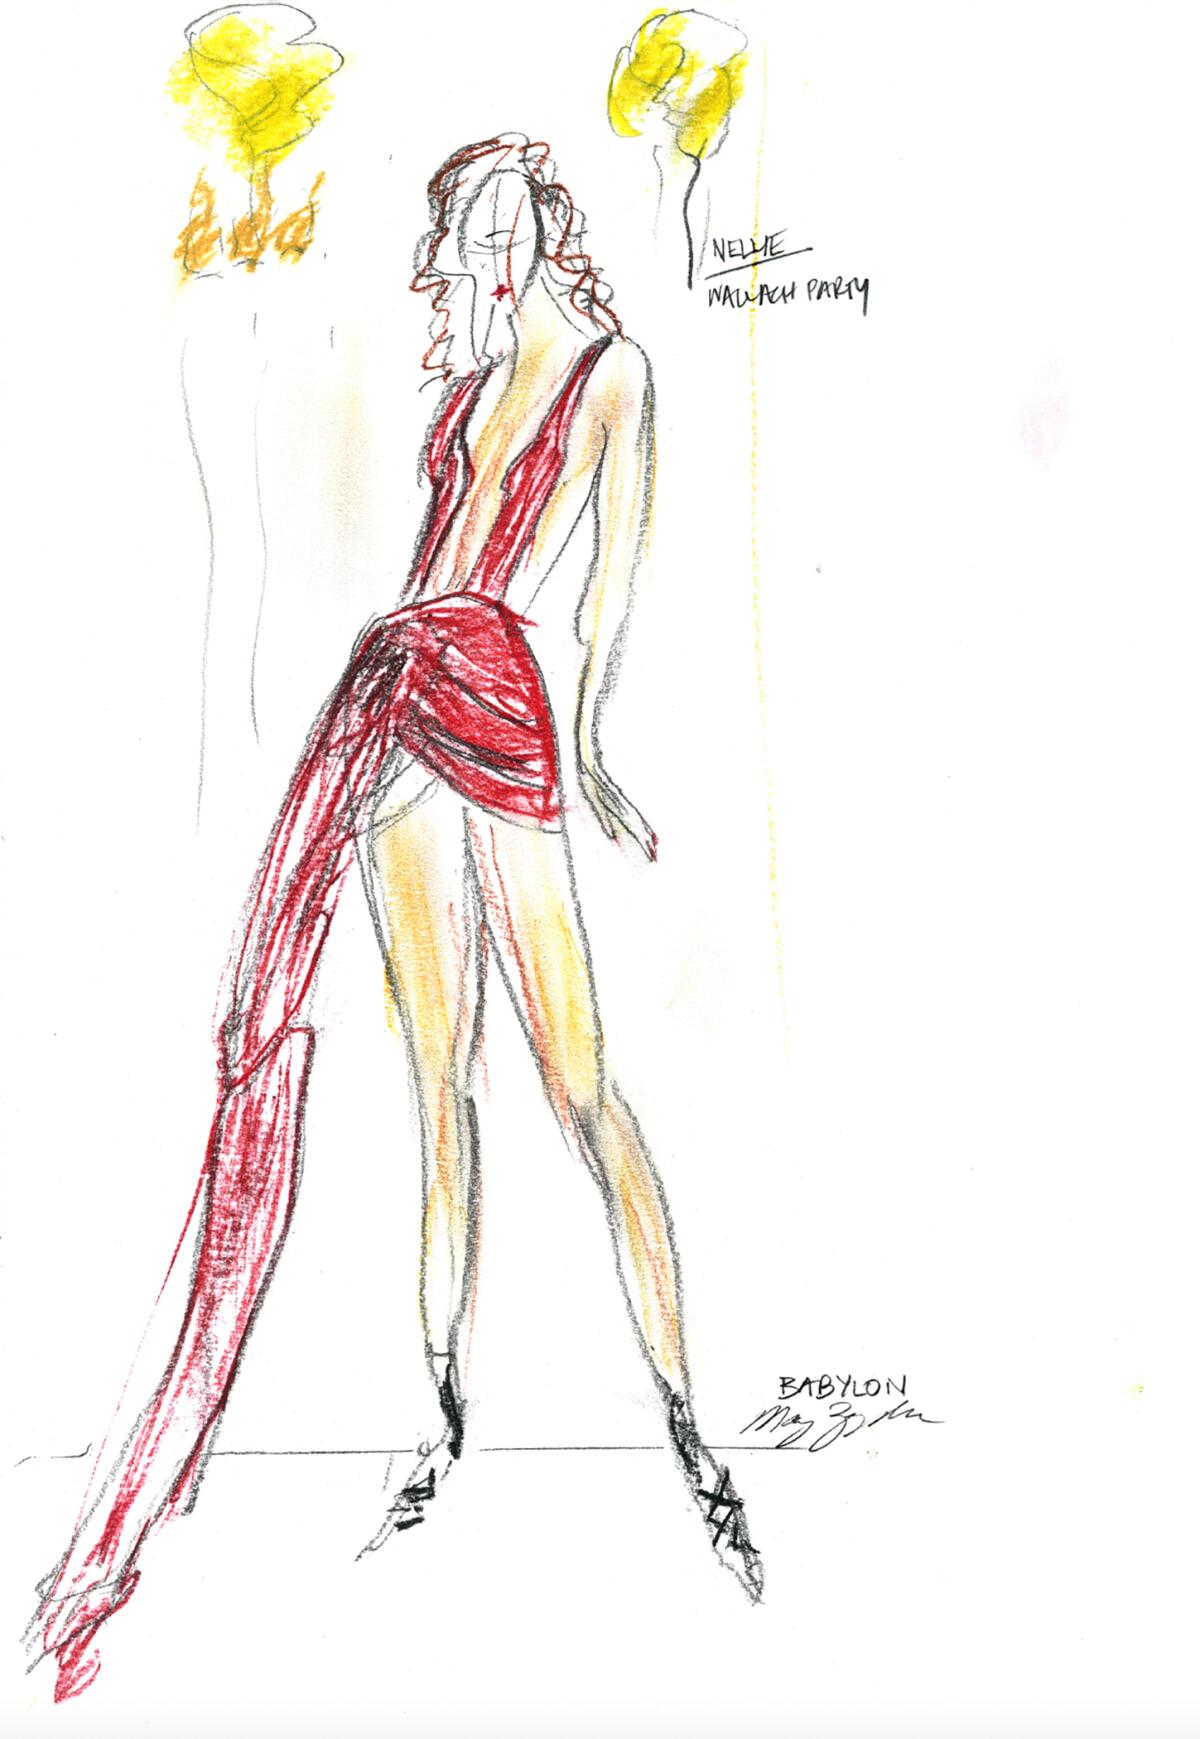 A sketch of the low-cut red dress Margot Robbie wears.